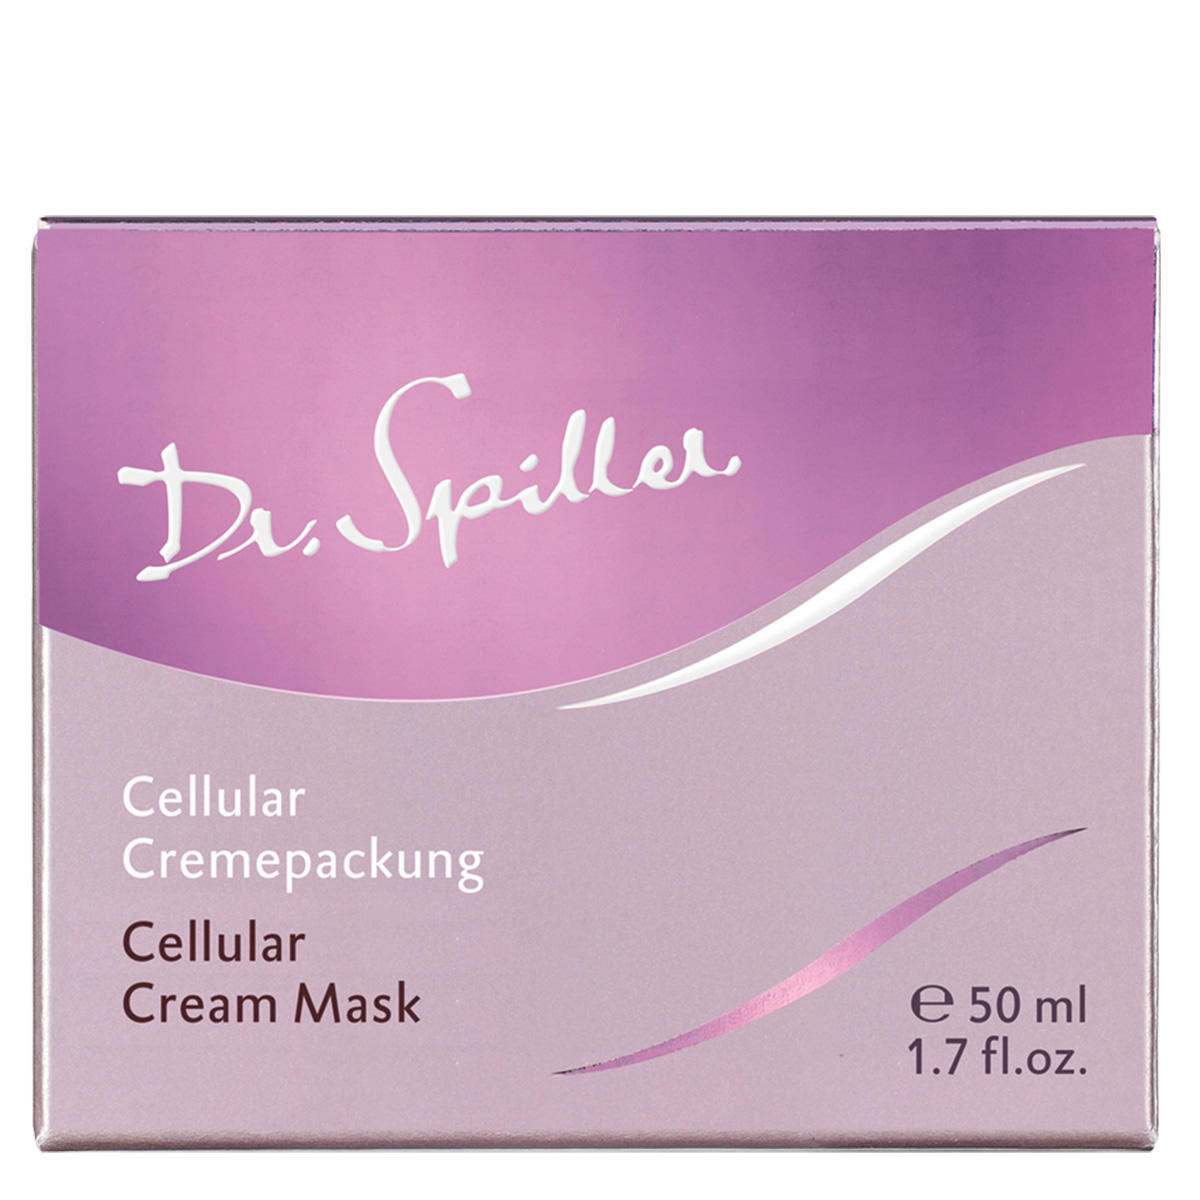 Dr. Spiller Biomimetic SkinCare Cellular Cream Pack 50 ml - 3